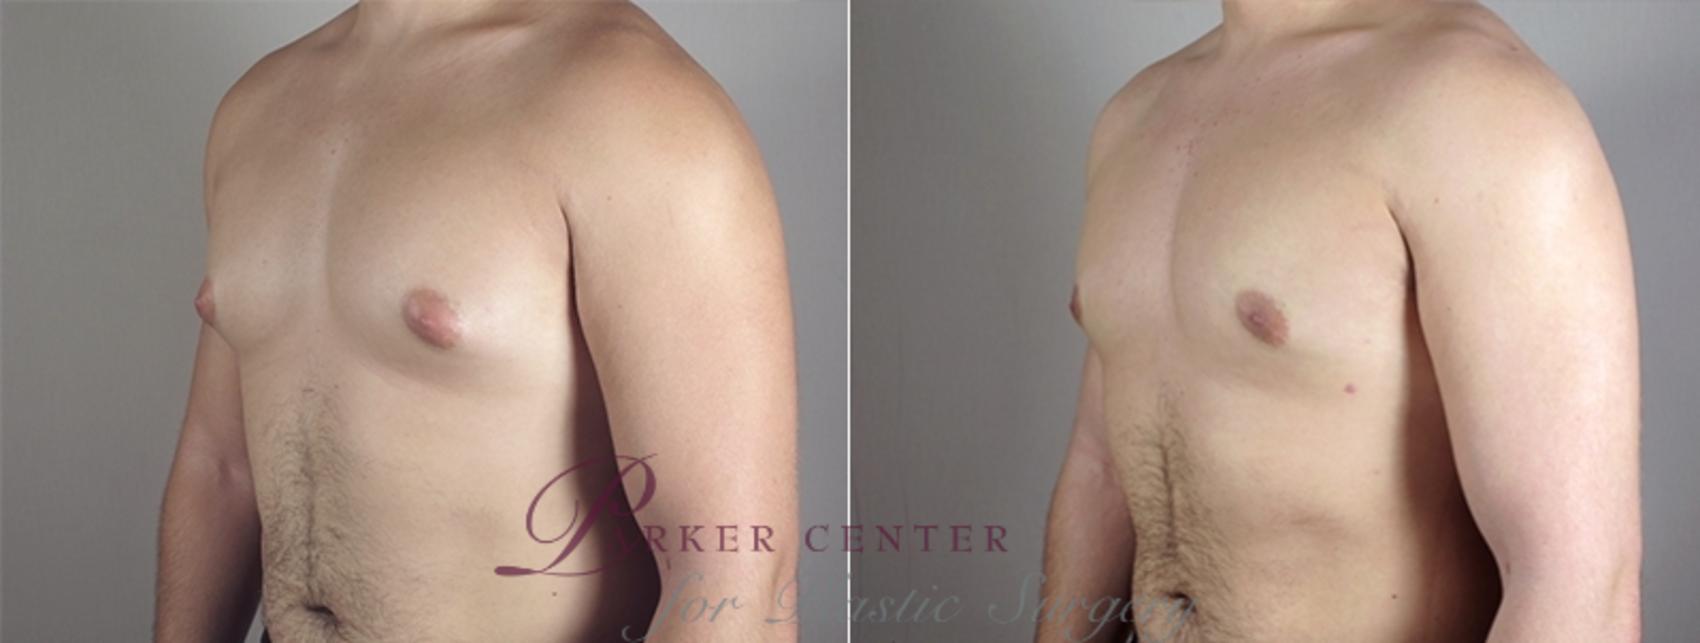 Gynecomastia Surgery Case 939 Before & After View #5 | Paramus, NJ | Parker Center for Plastic Surgery